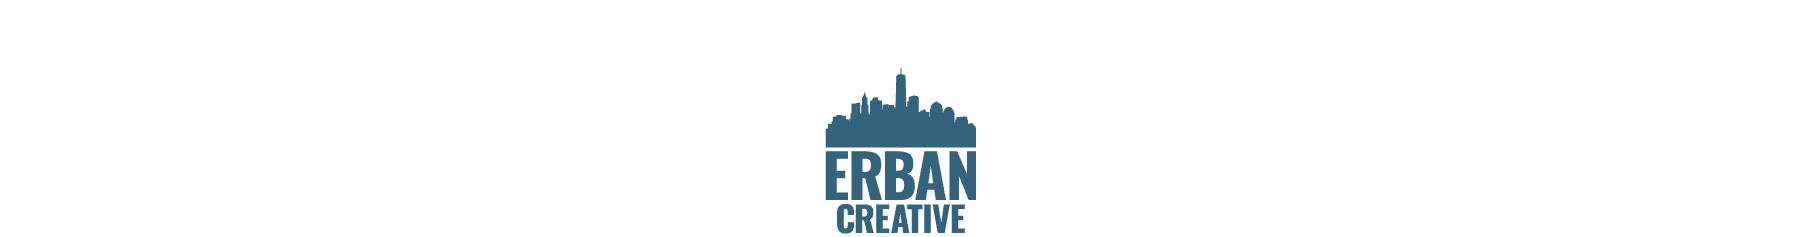 Home - Erban Creative Logo Banner